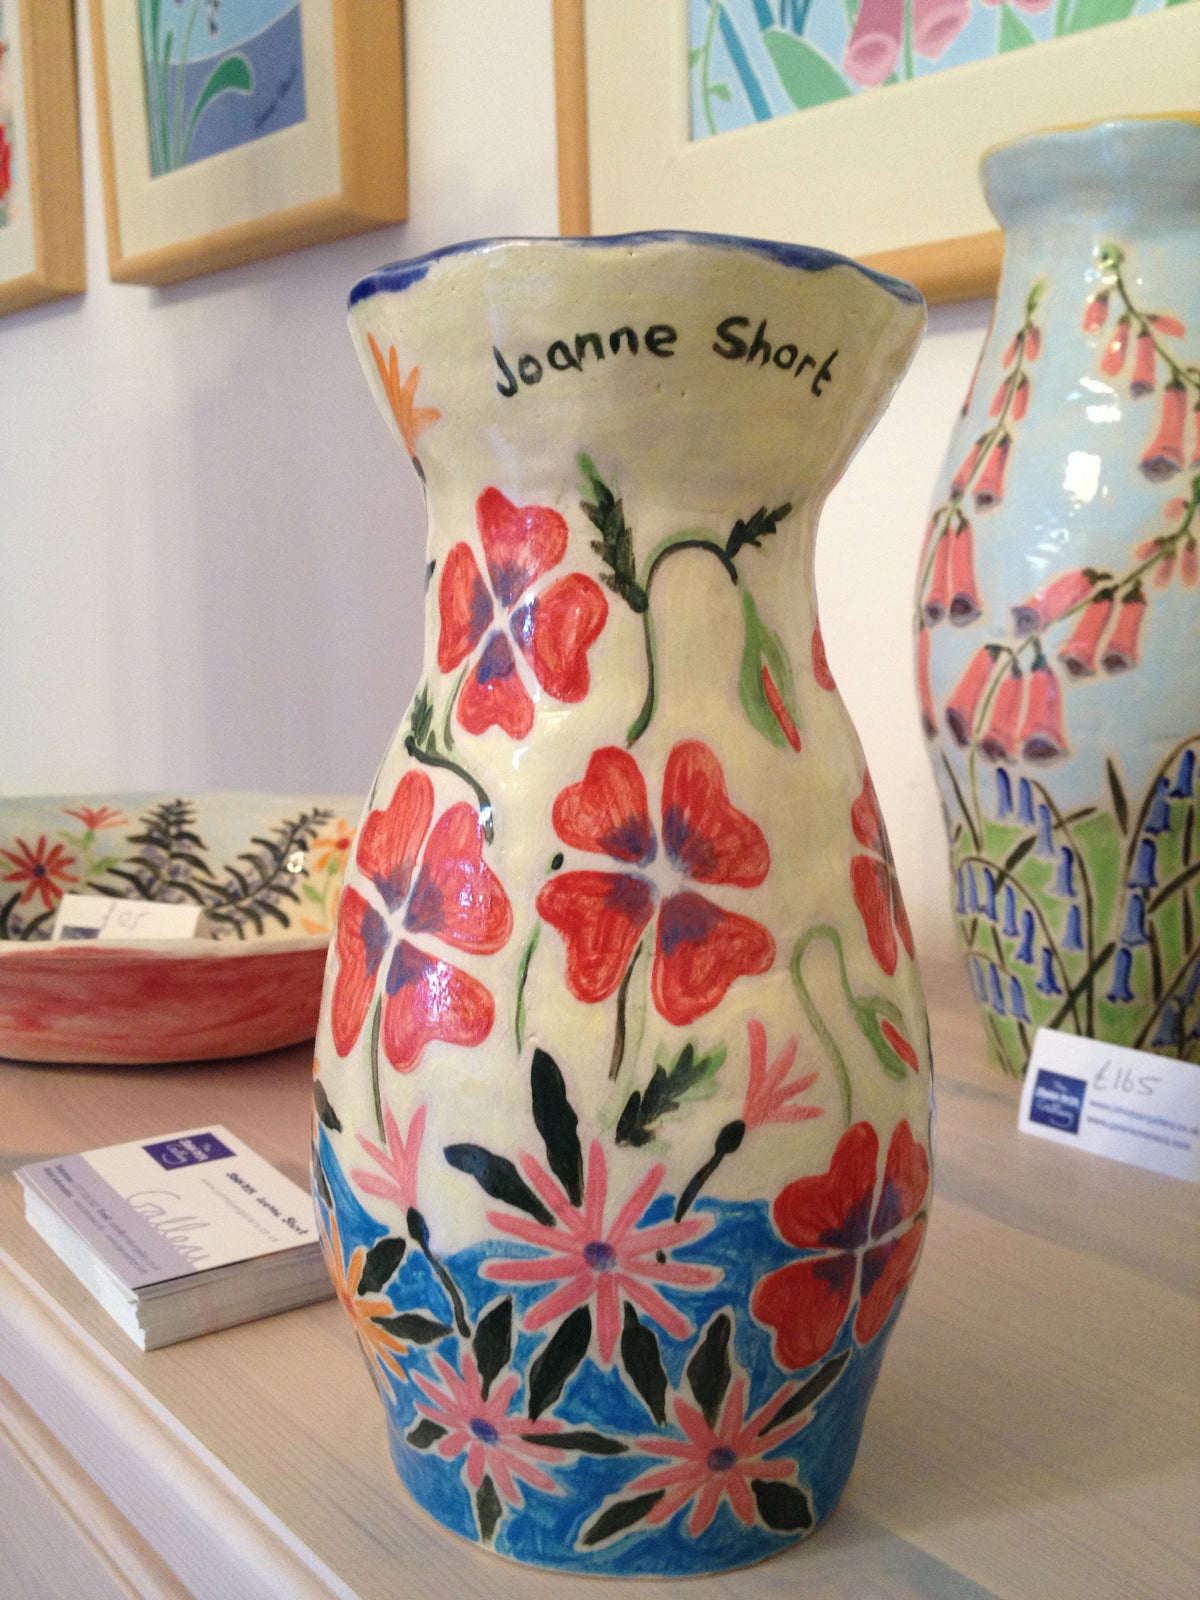 Cornish ceramic flower vase. Red Poppies and pink Daisies by Cornish artist Joanne Short